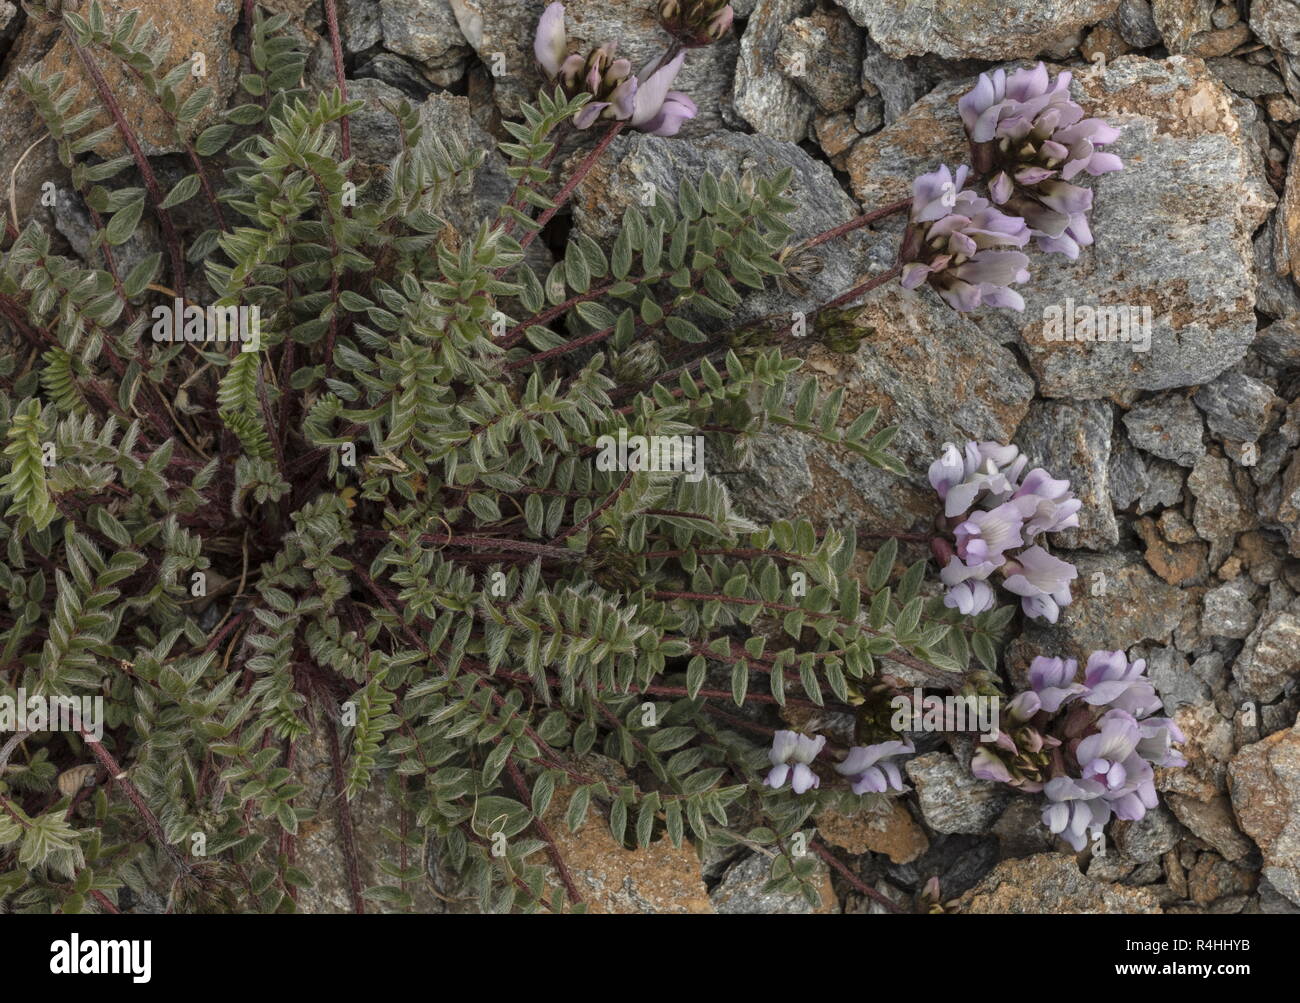 Swiss milk-vetch, Oxytropis helvetica, in flower high in the Vanoise National Park, French Alps. Stock Photo